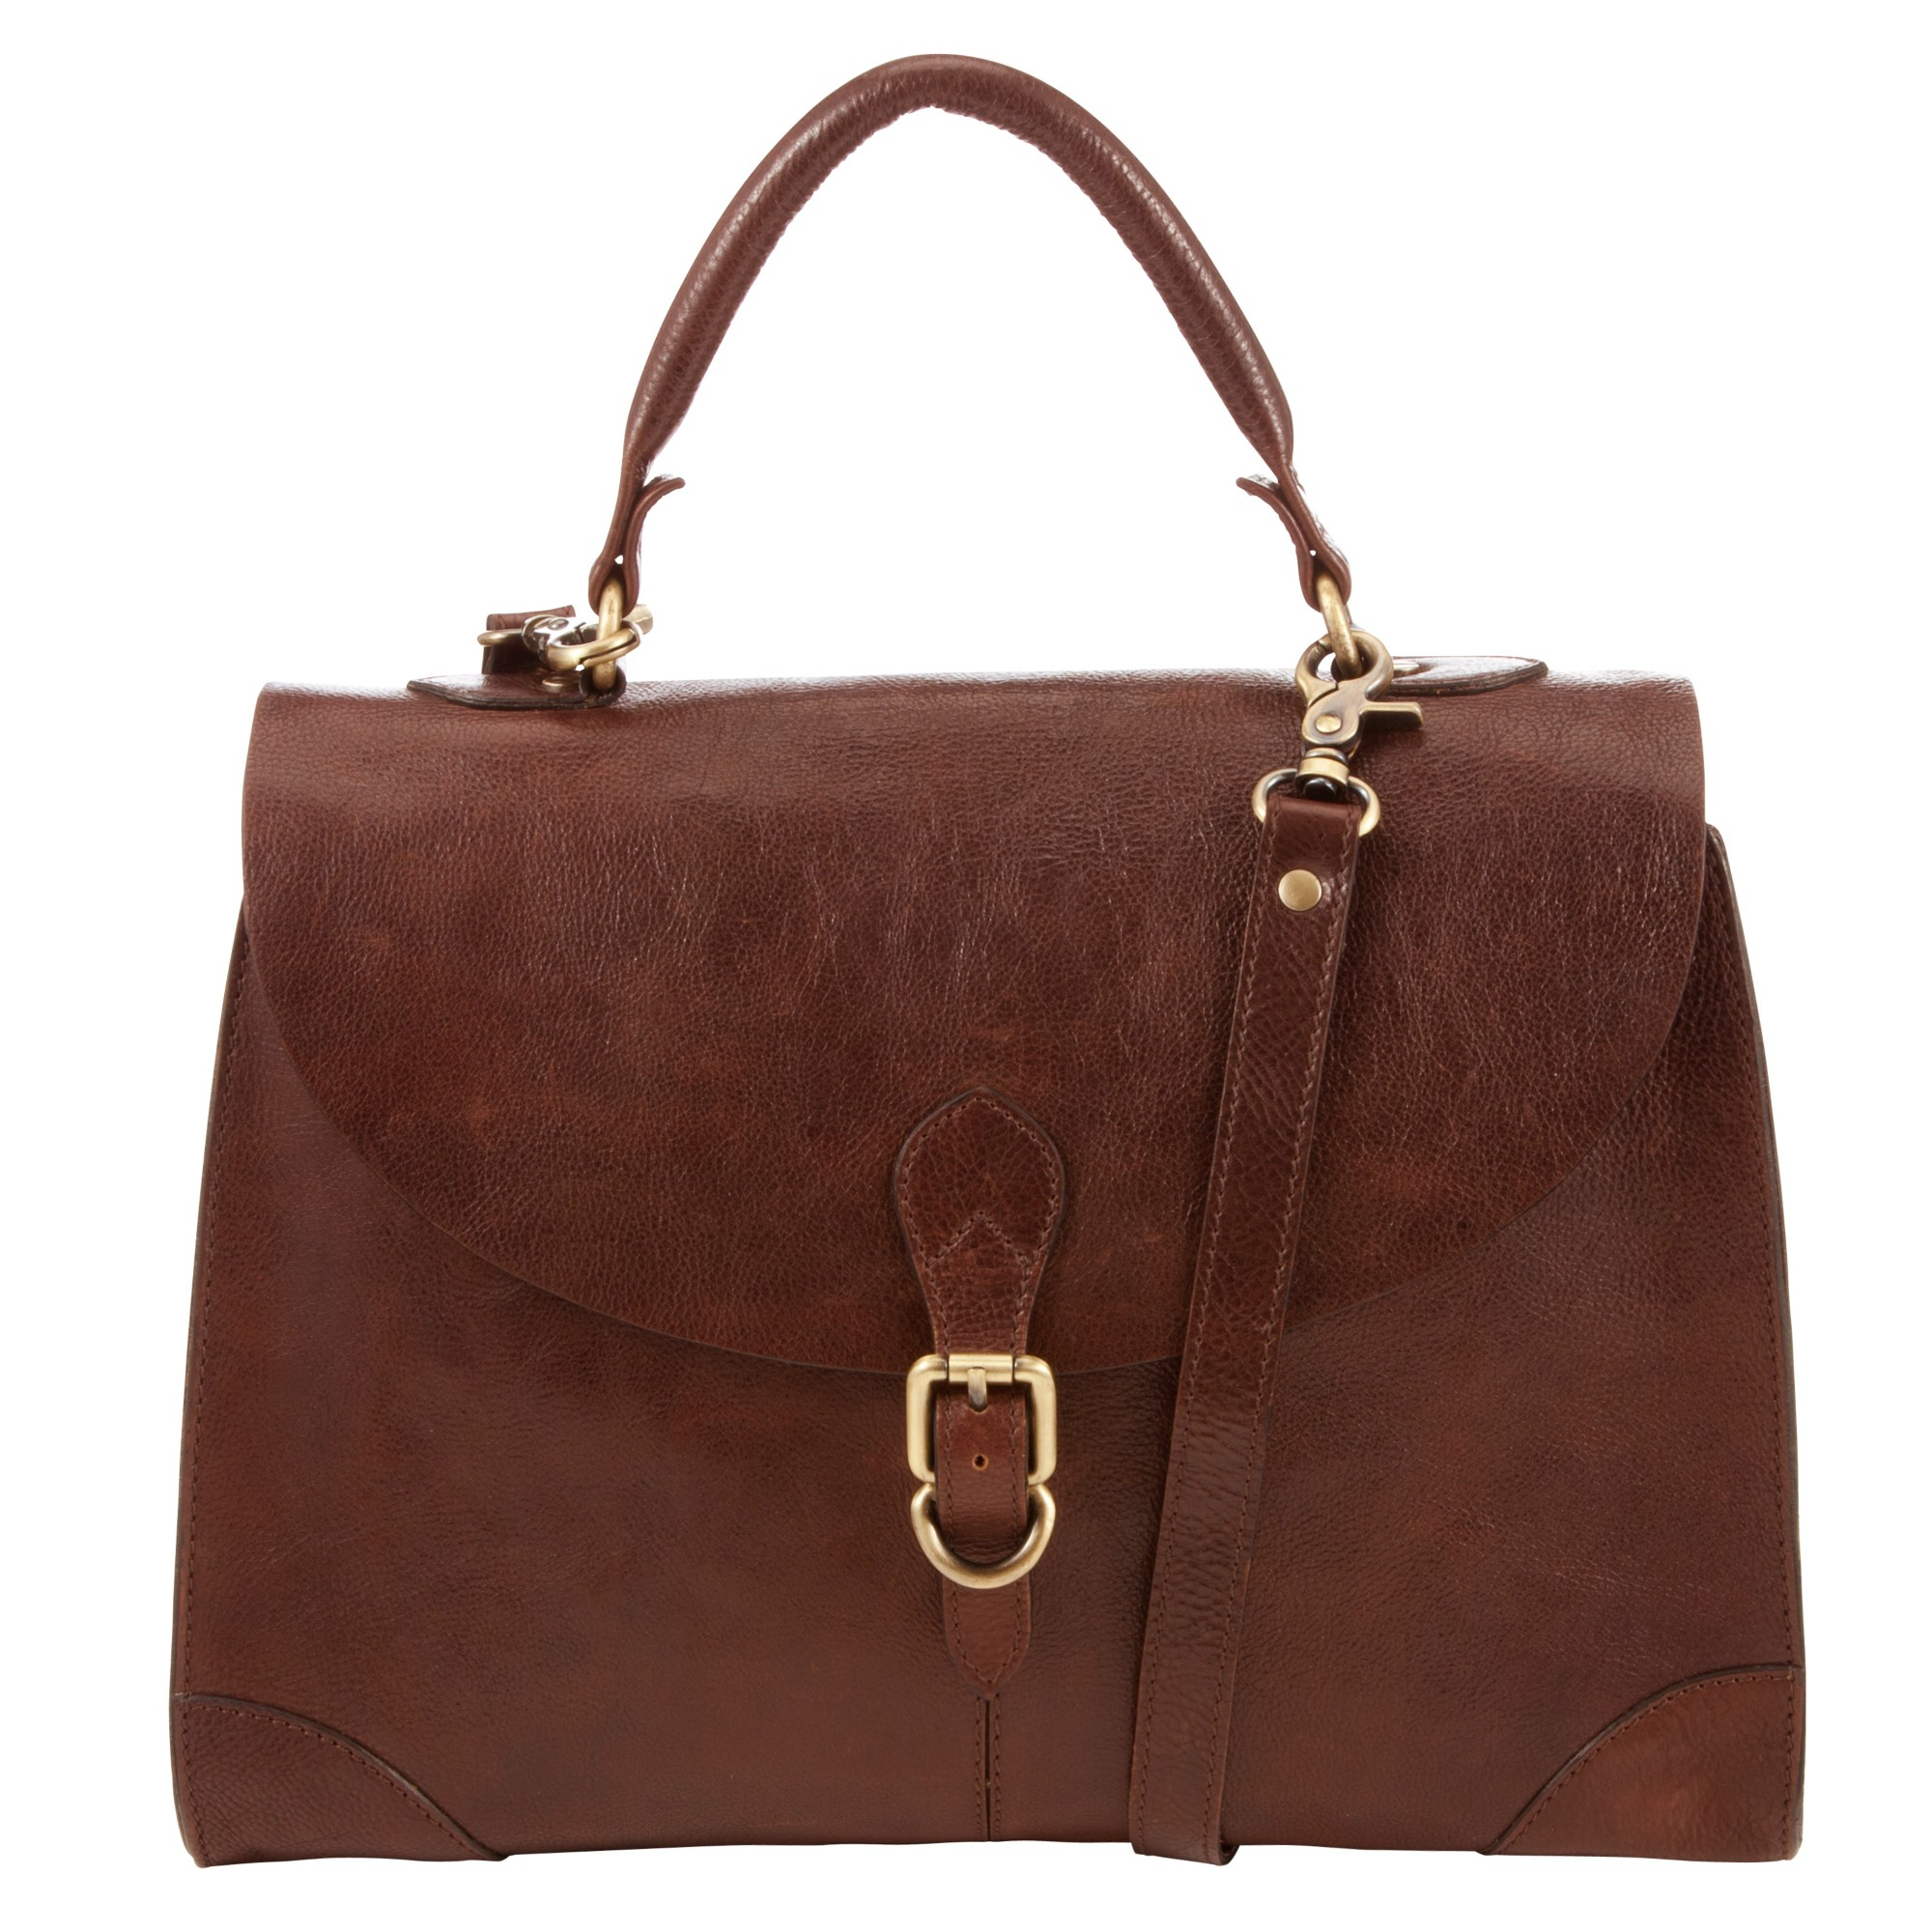 John Lewis Large Leather Top Handle Bag in Brown (Tan) | Lyst